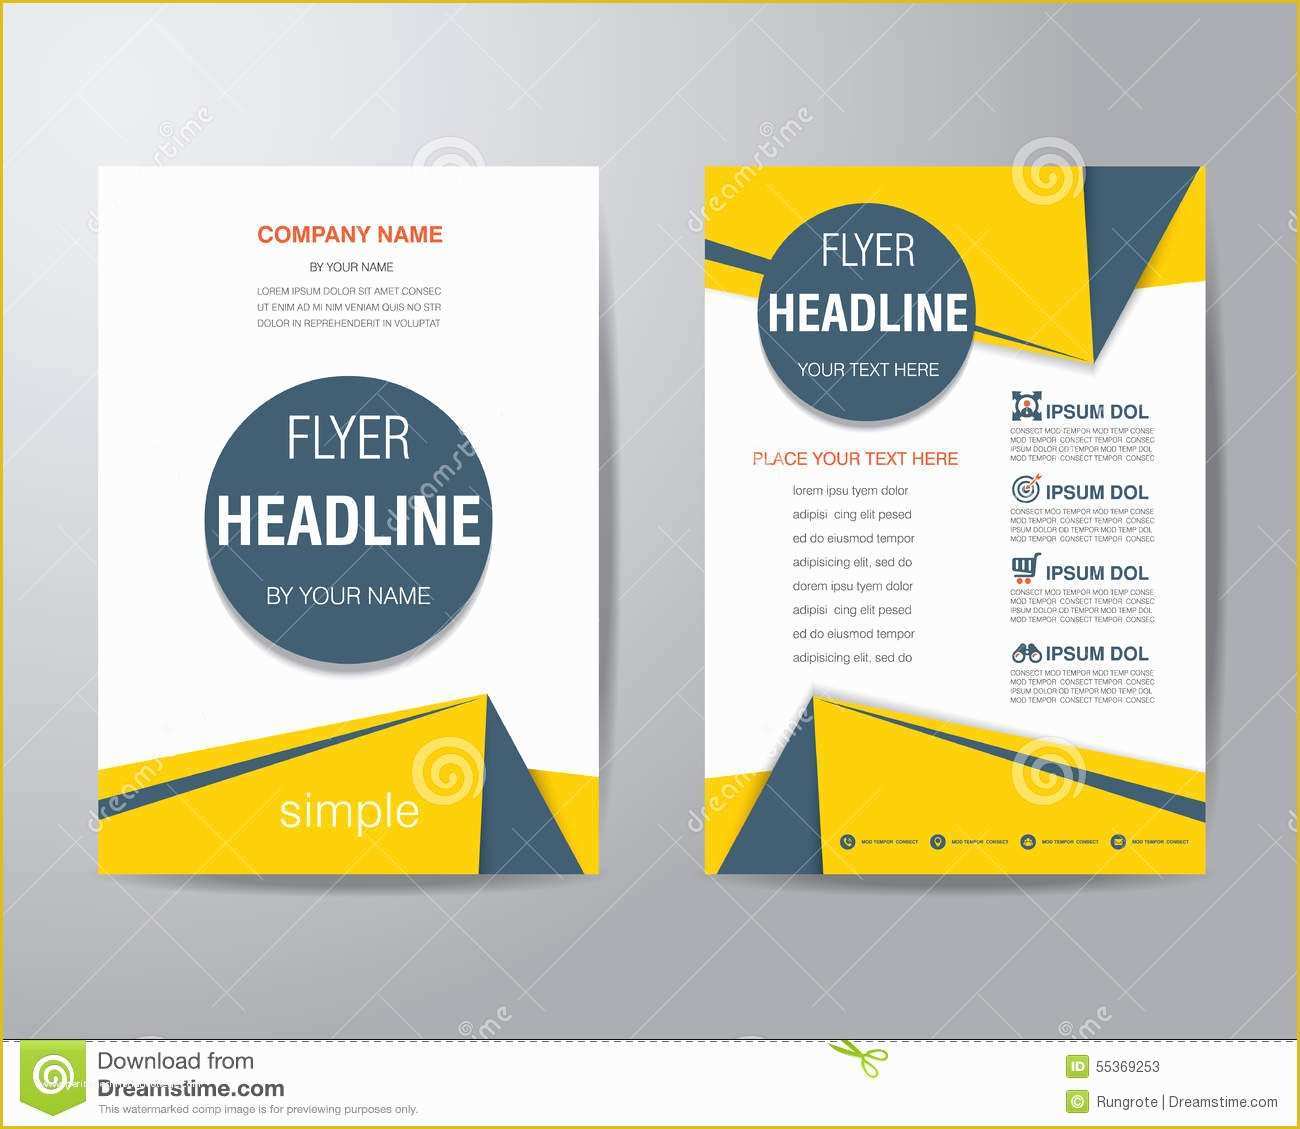 Free Online Mailer Design Templates Of Flyer Design Layout Yourweek 39ea0ceca25e